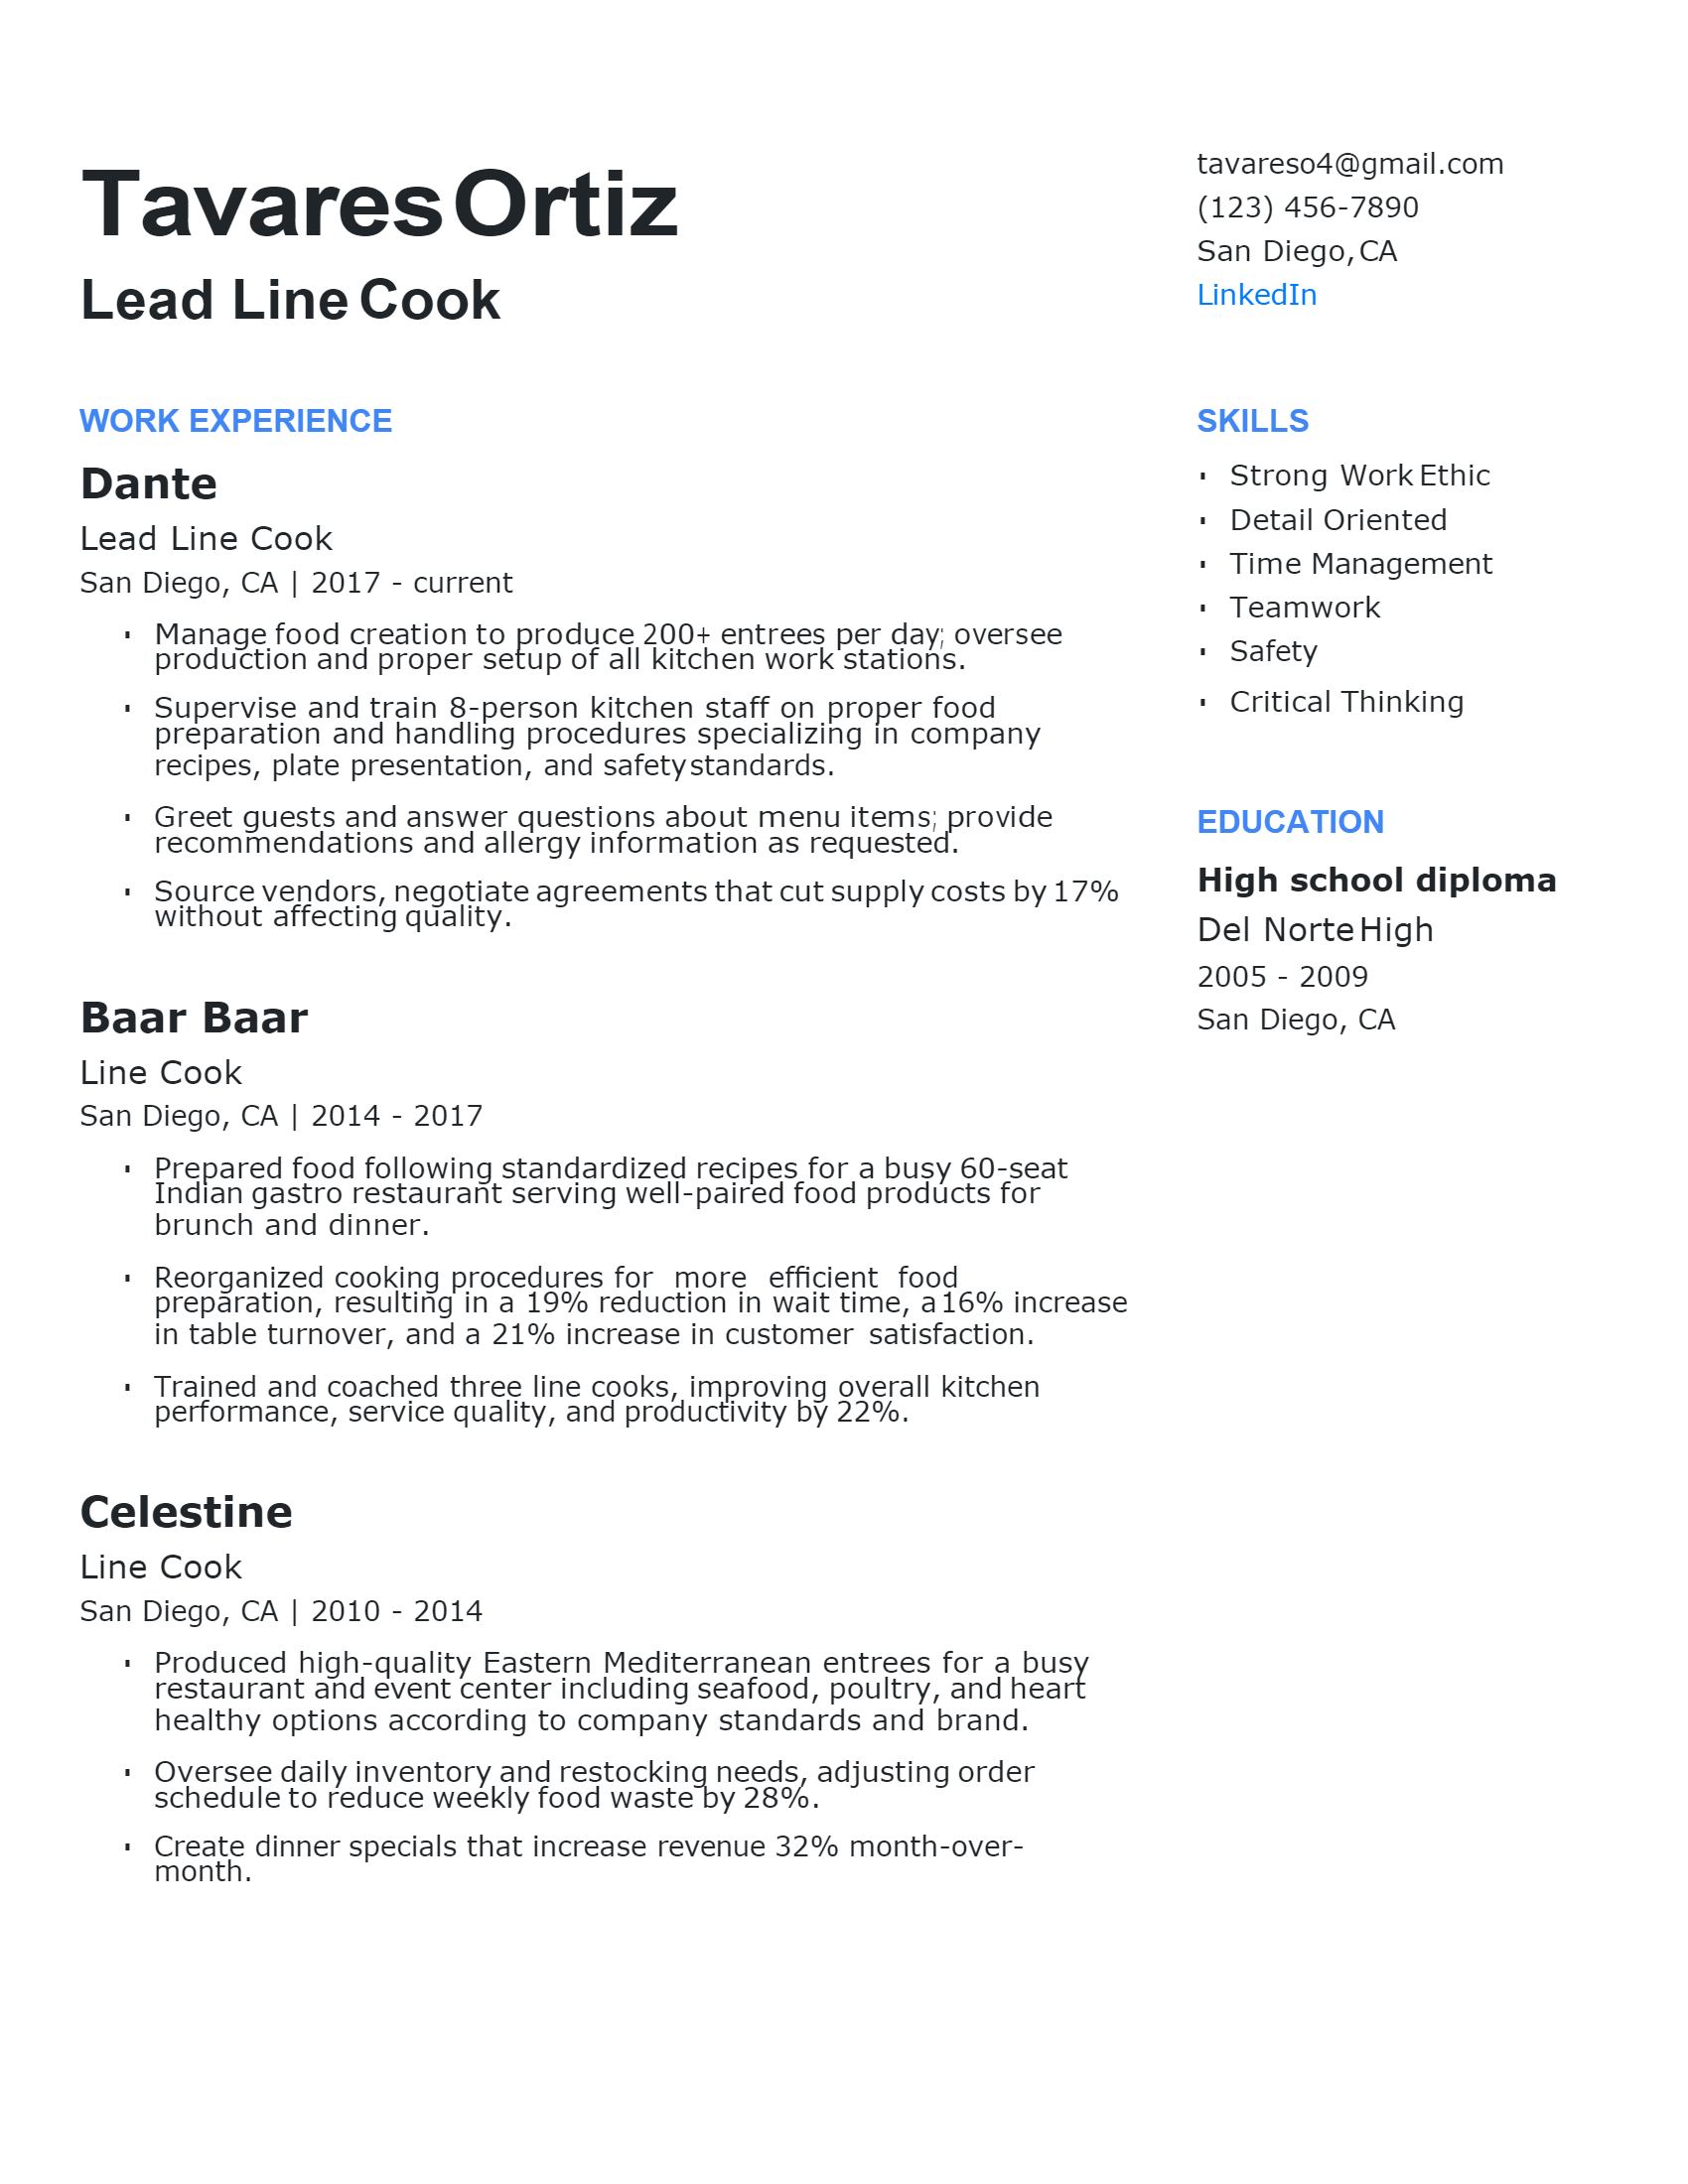 Lead Line Cook Resume .Docx (Word)